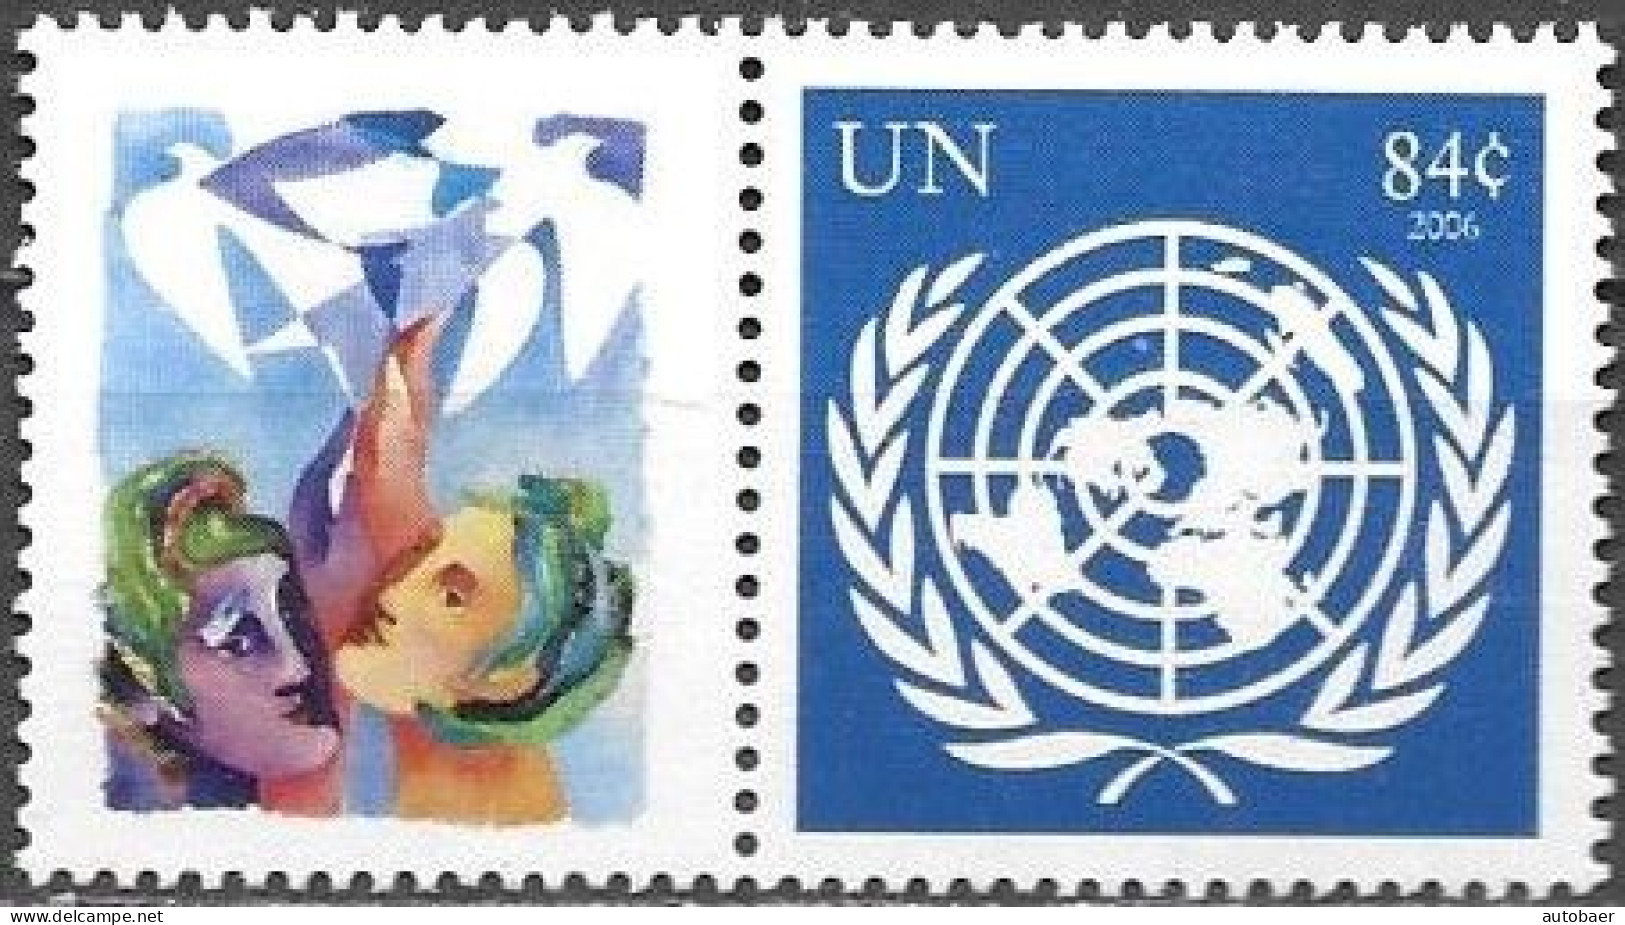 United Nations UNO UN Vereinte Nationen New York 2006 Greetings Mi.No.1032 Label MNH ** Neuf - Unused Stamps